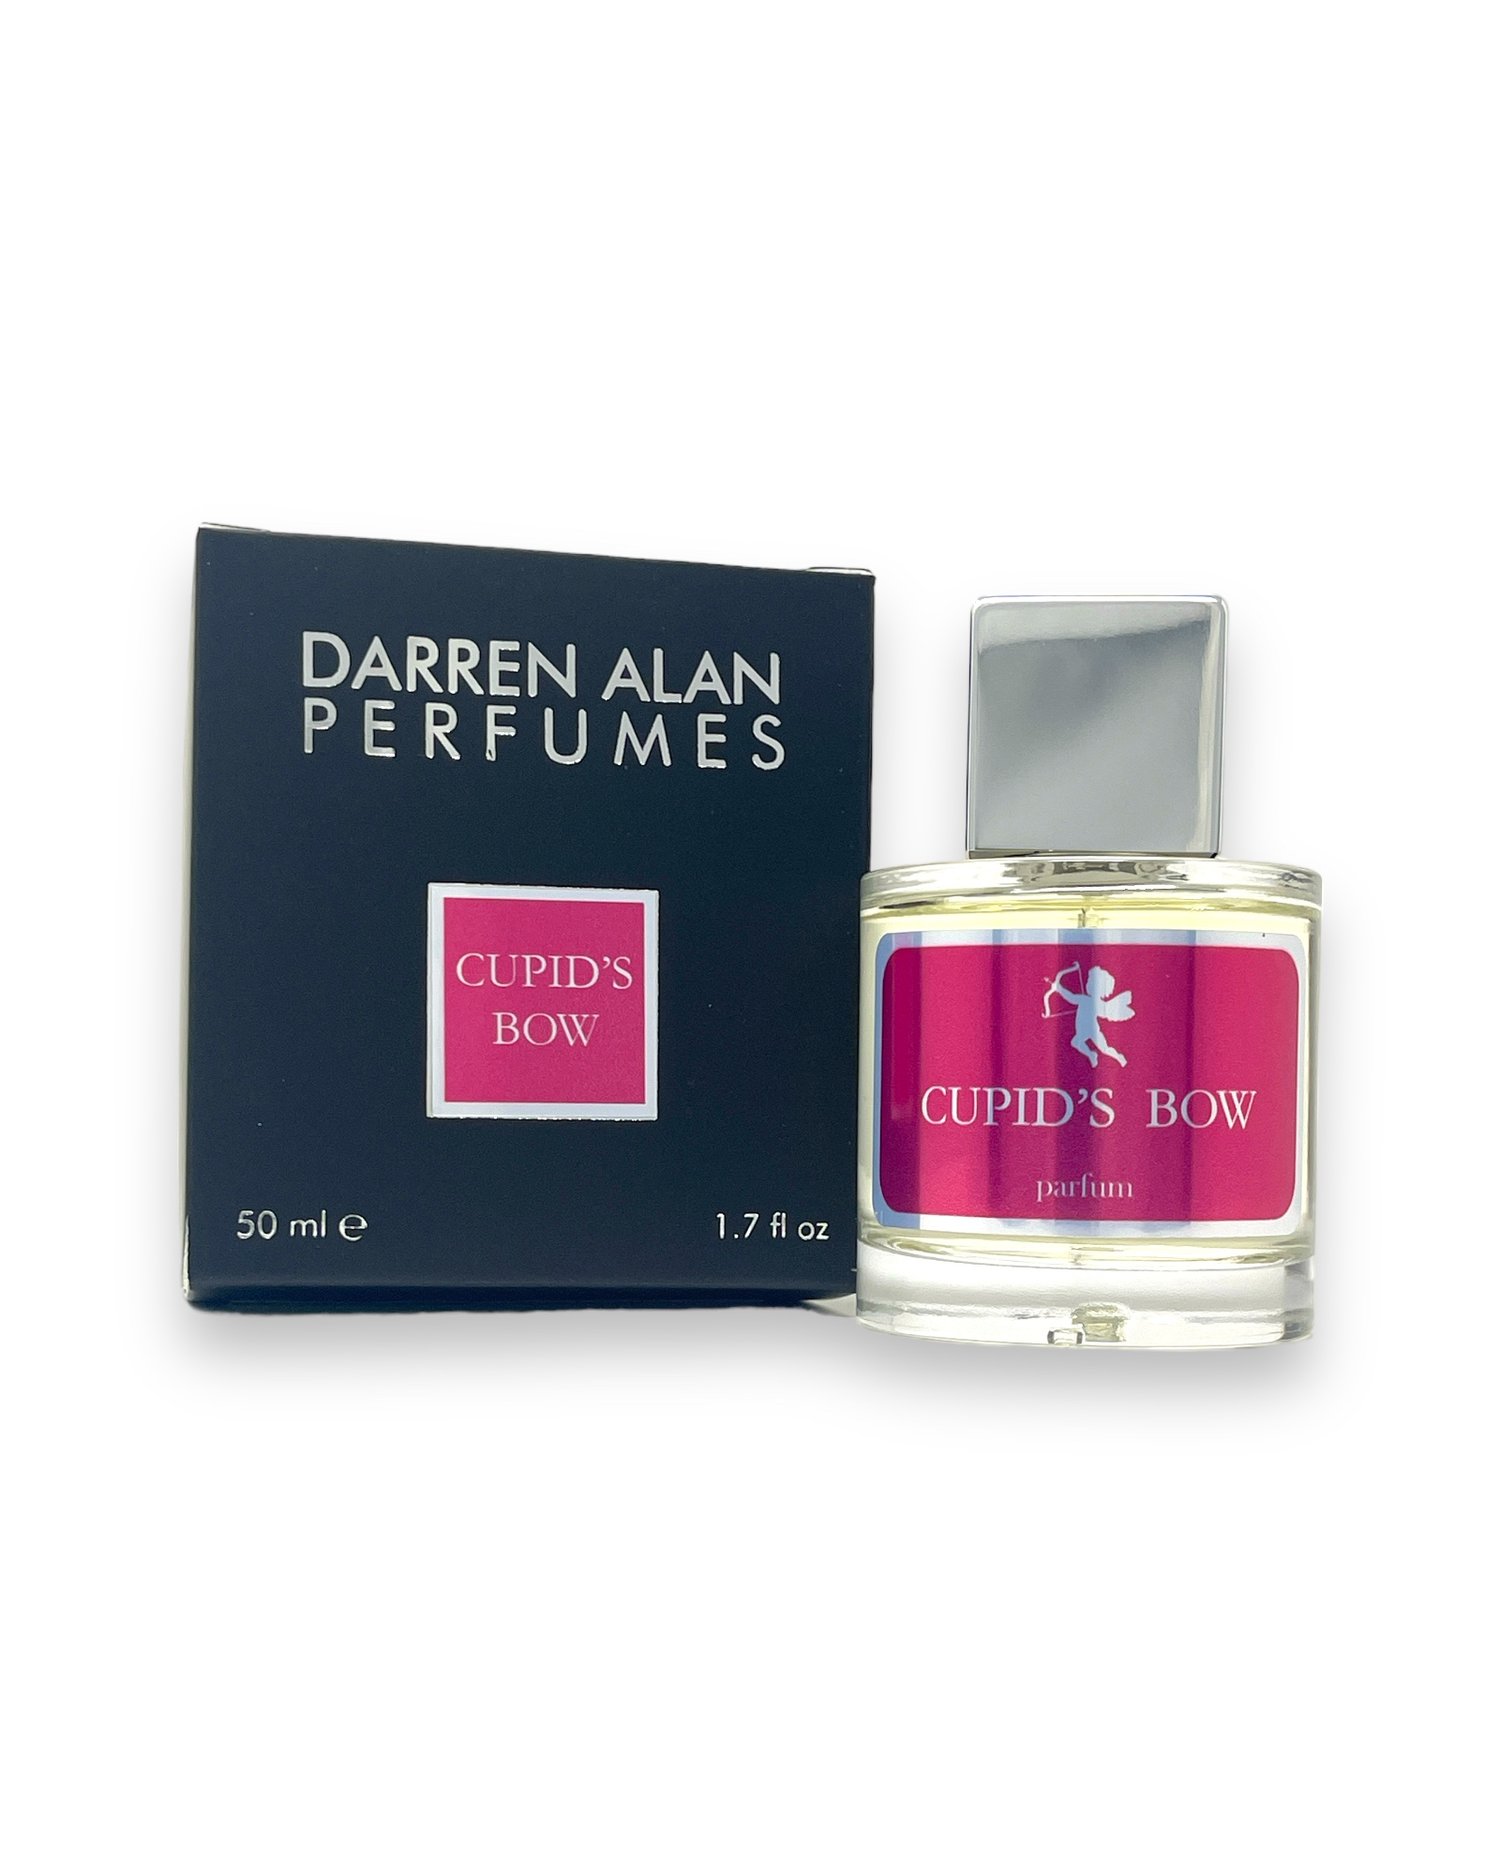 Cupid's Bow Parfum Darren Alan Perfumes — Darren Alan Perfumes